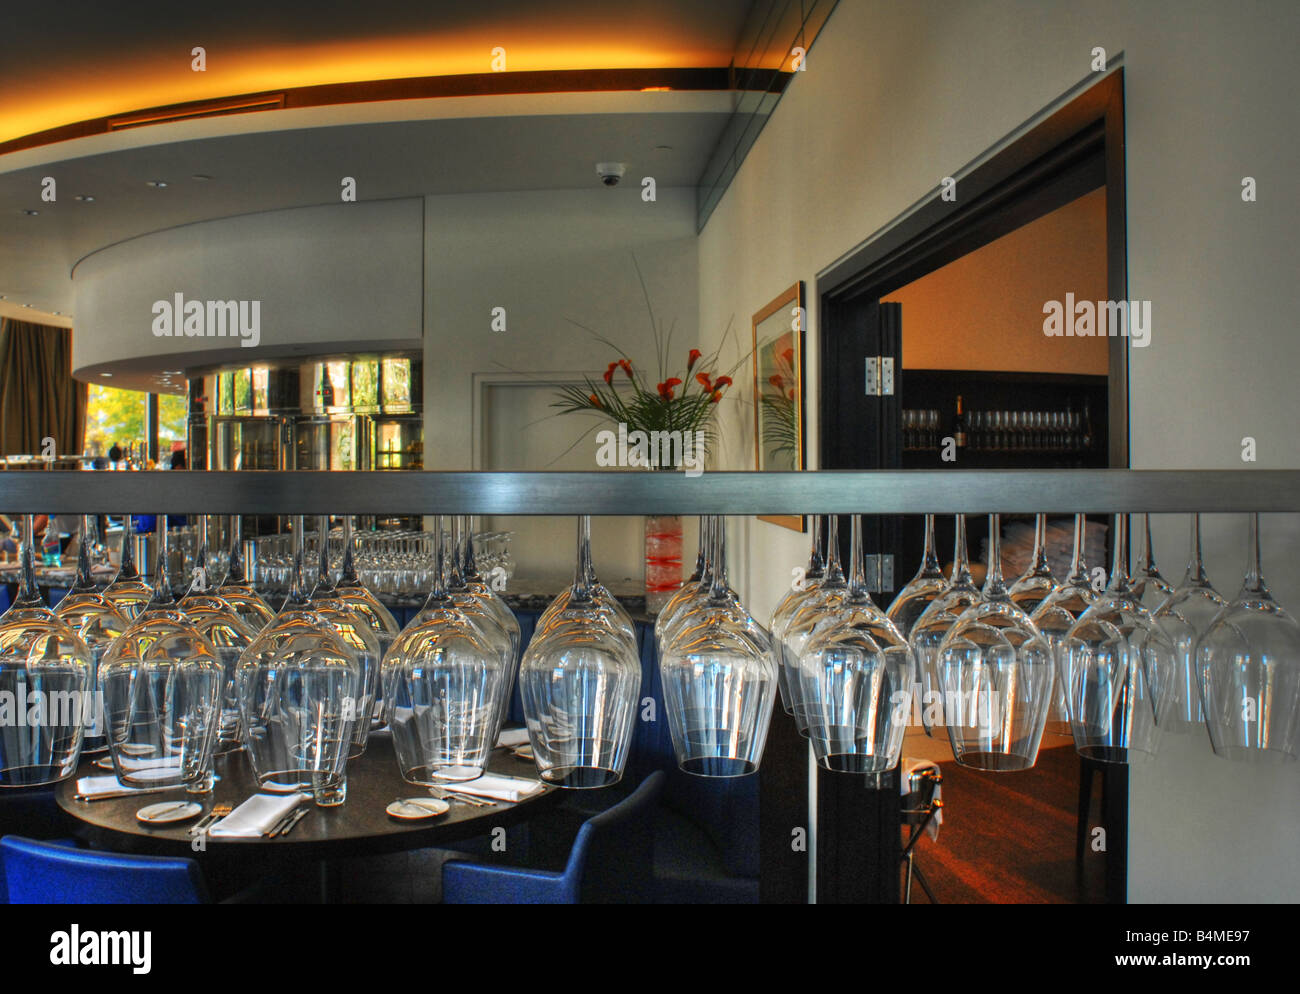 Rows of wine glasses at the Rotunda Restaurant / bar, Kings Place, London Stock Photo